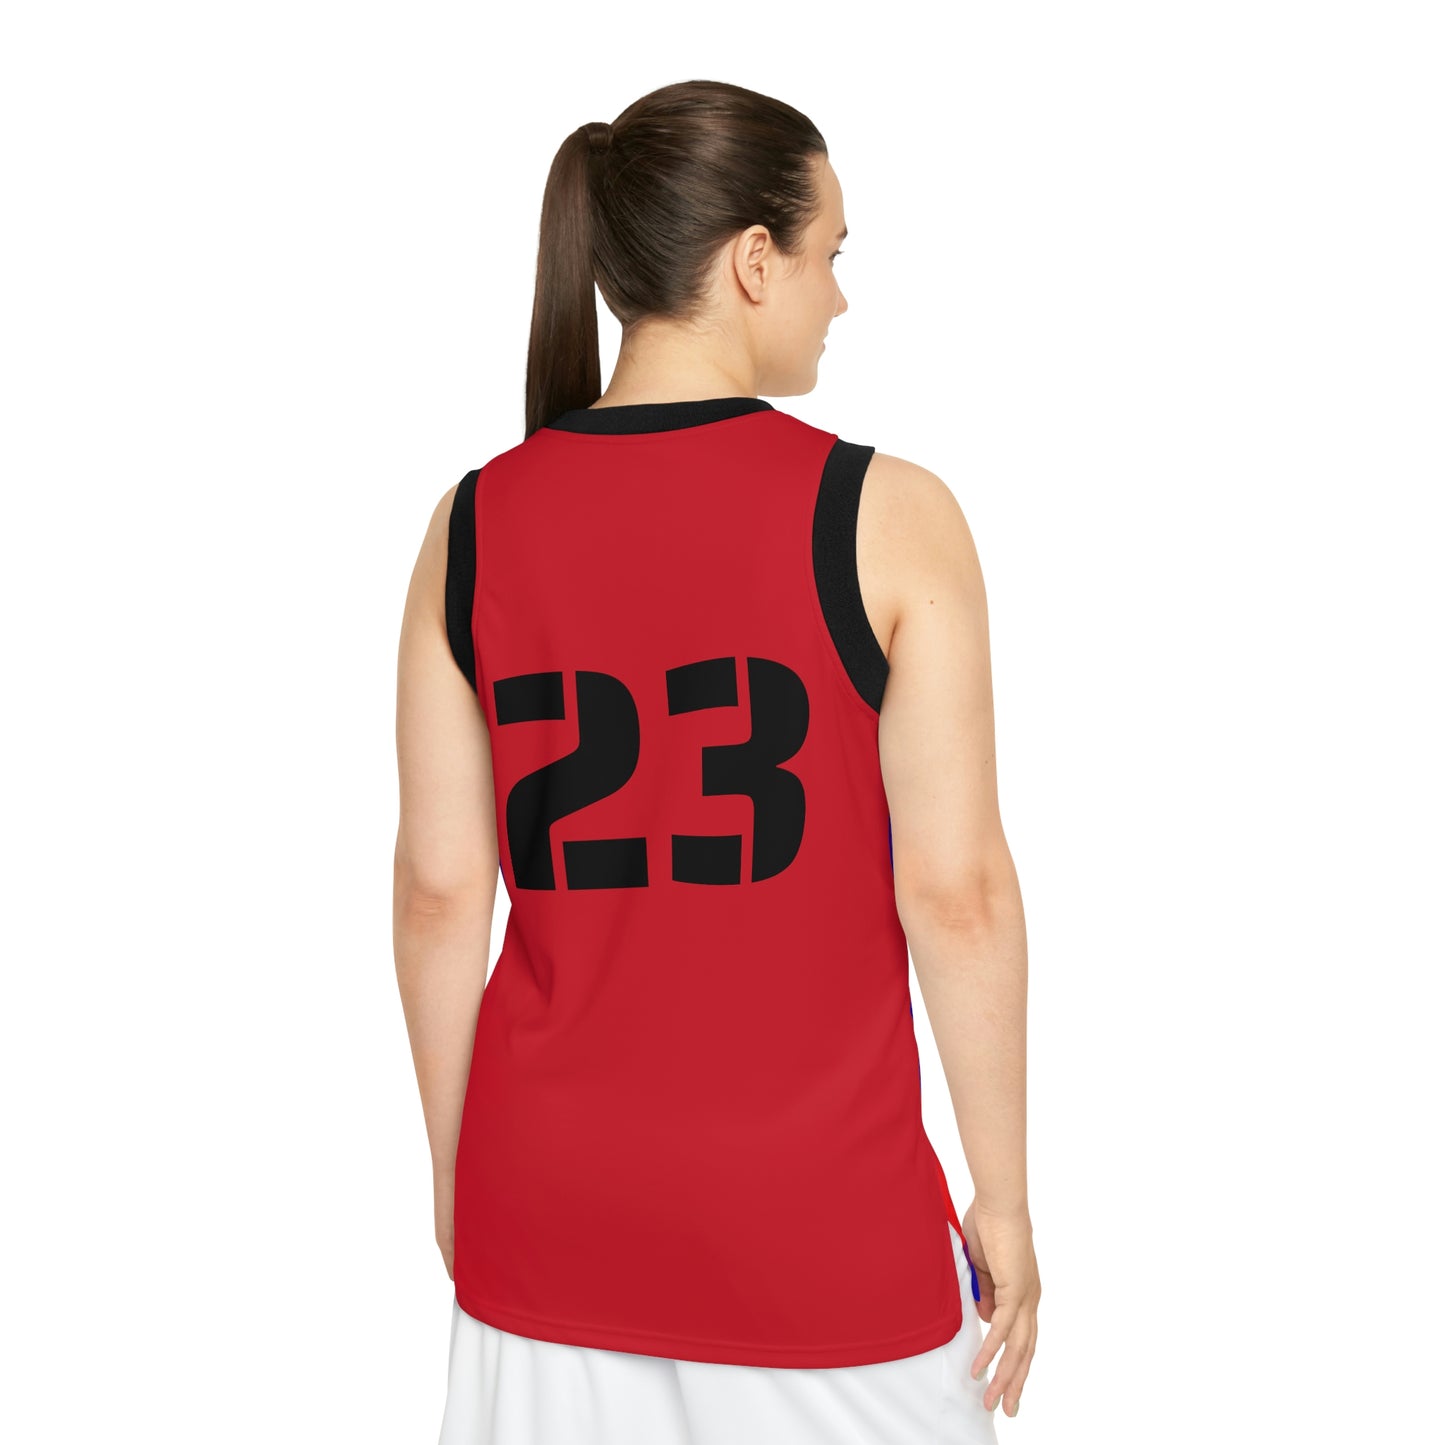 The Heather B Unisex Basketball Jersey